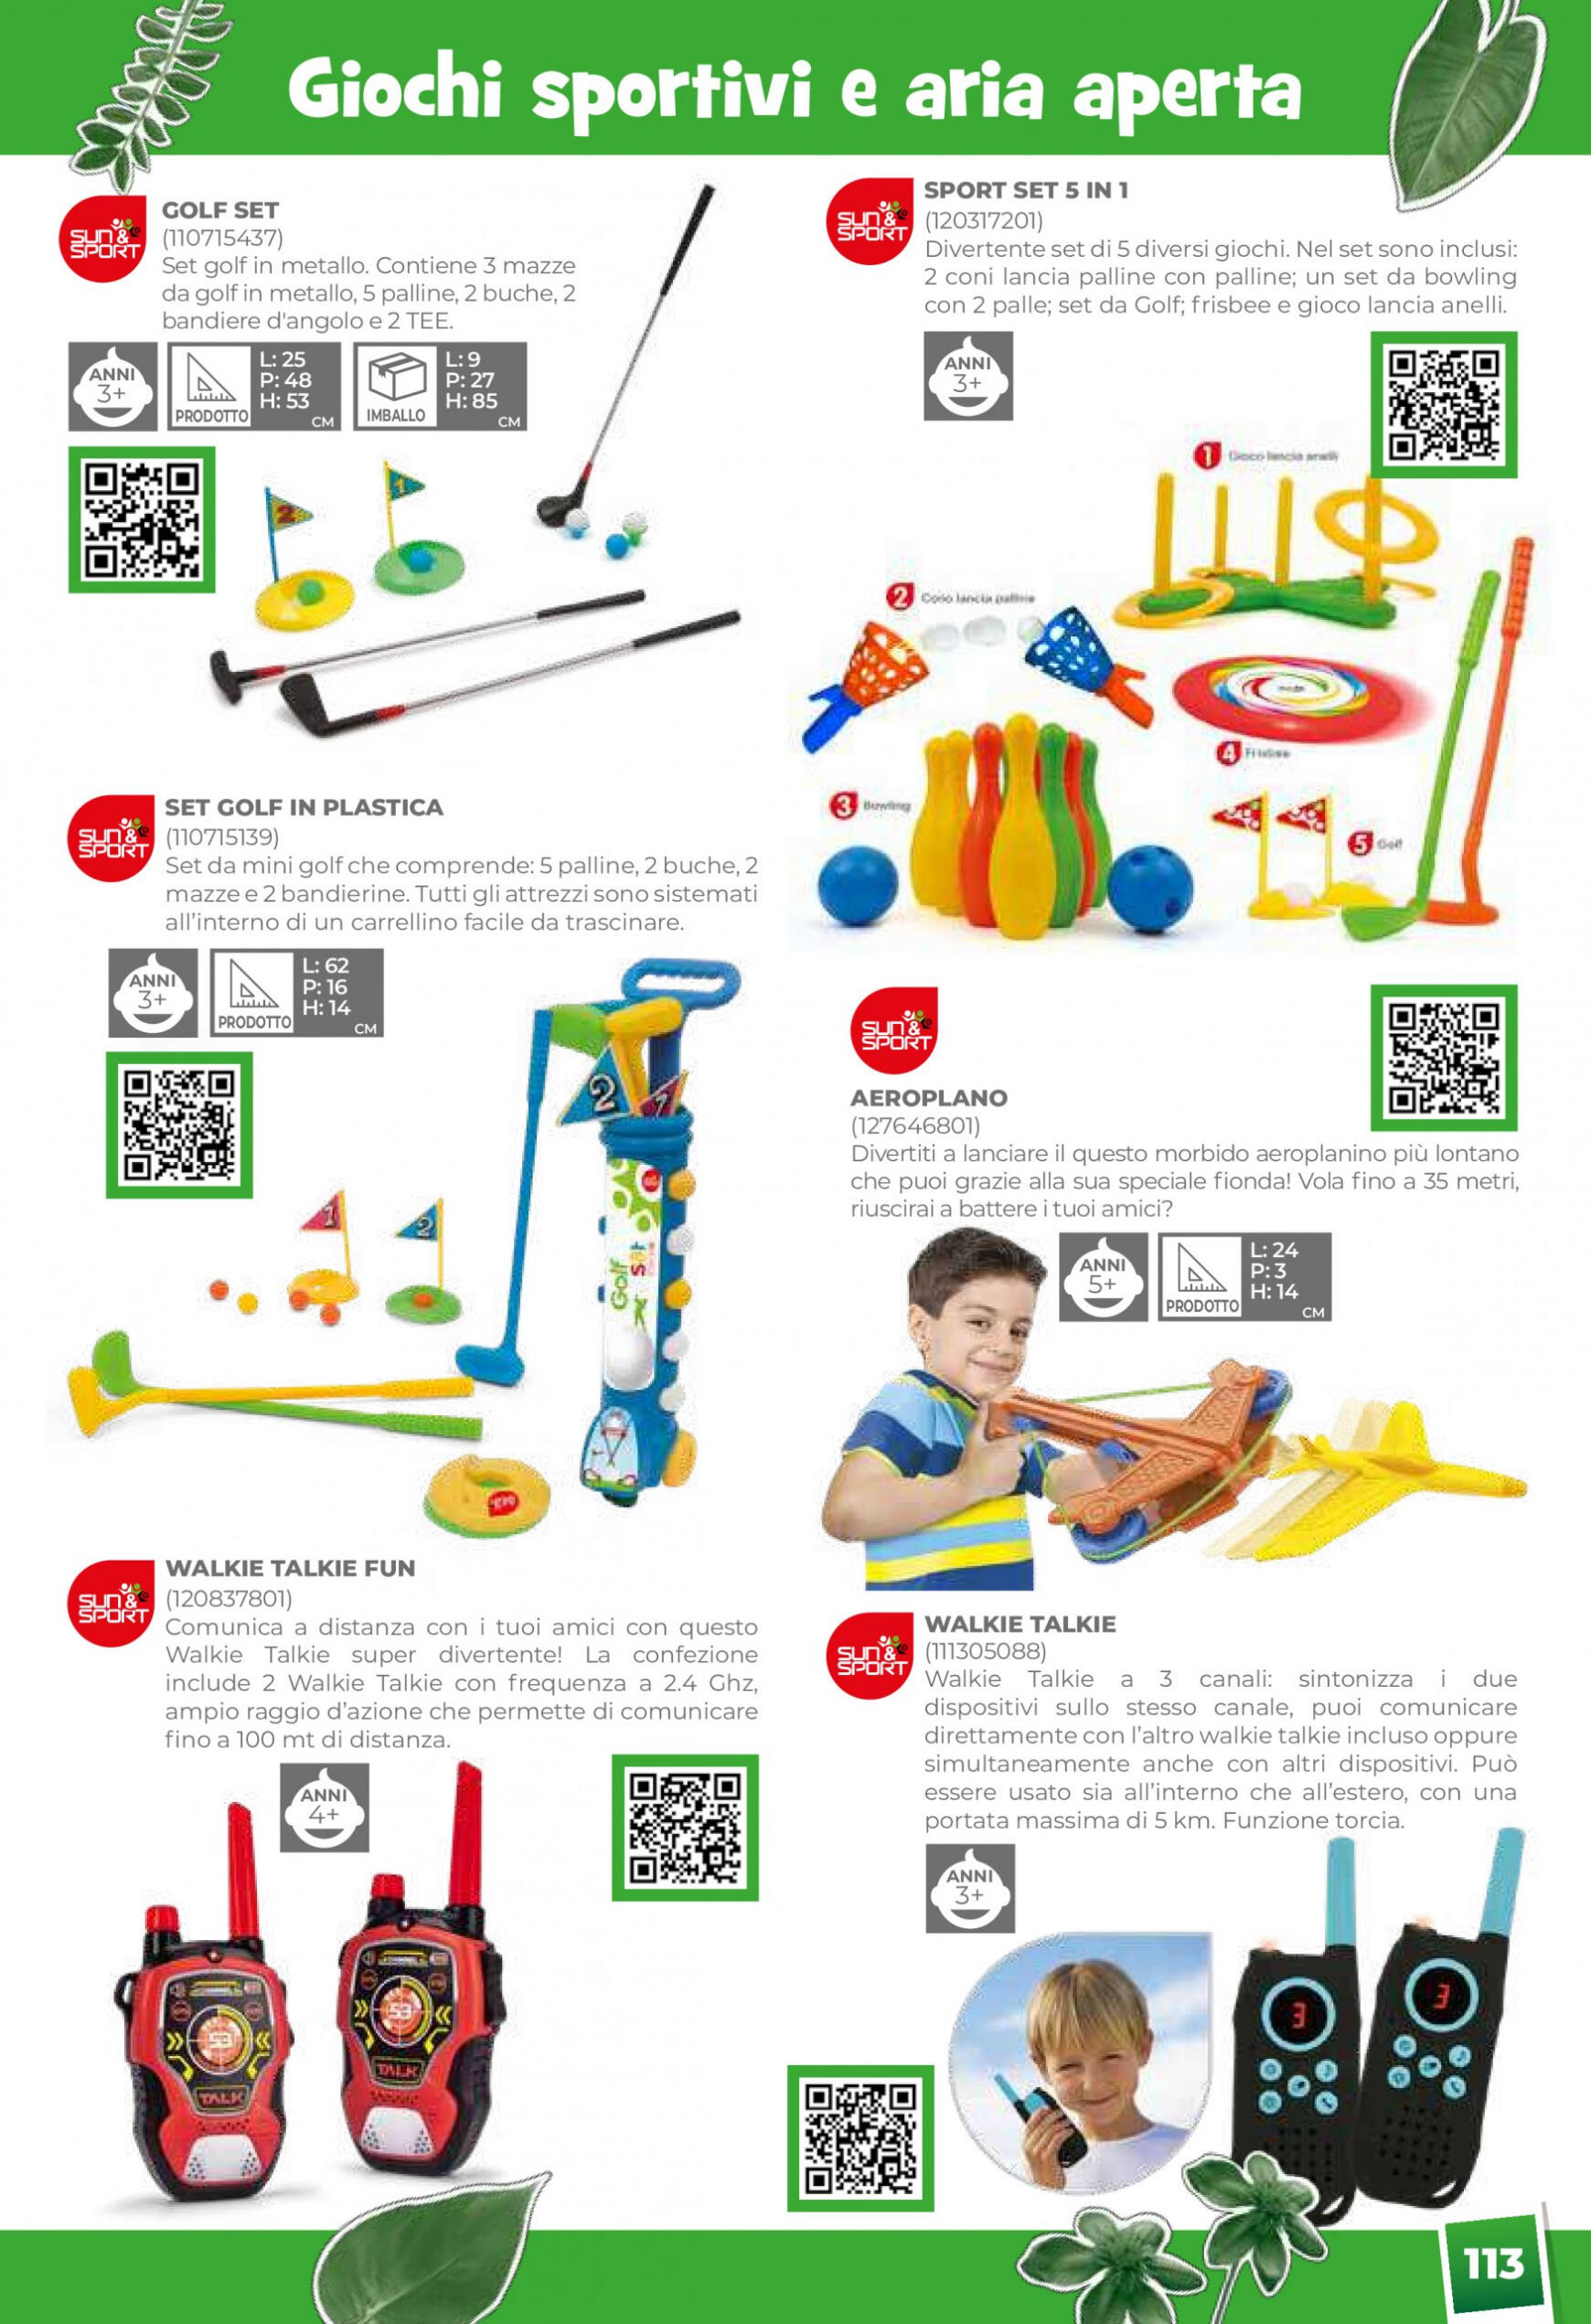 toys-center - Nuovo volantino Toys Center 01.05. - 31.12. - page: 115